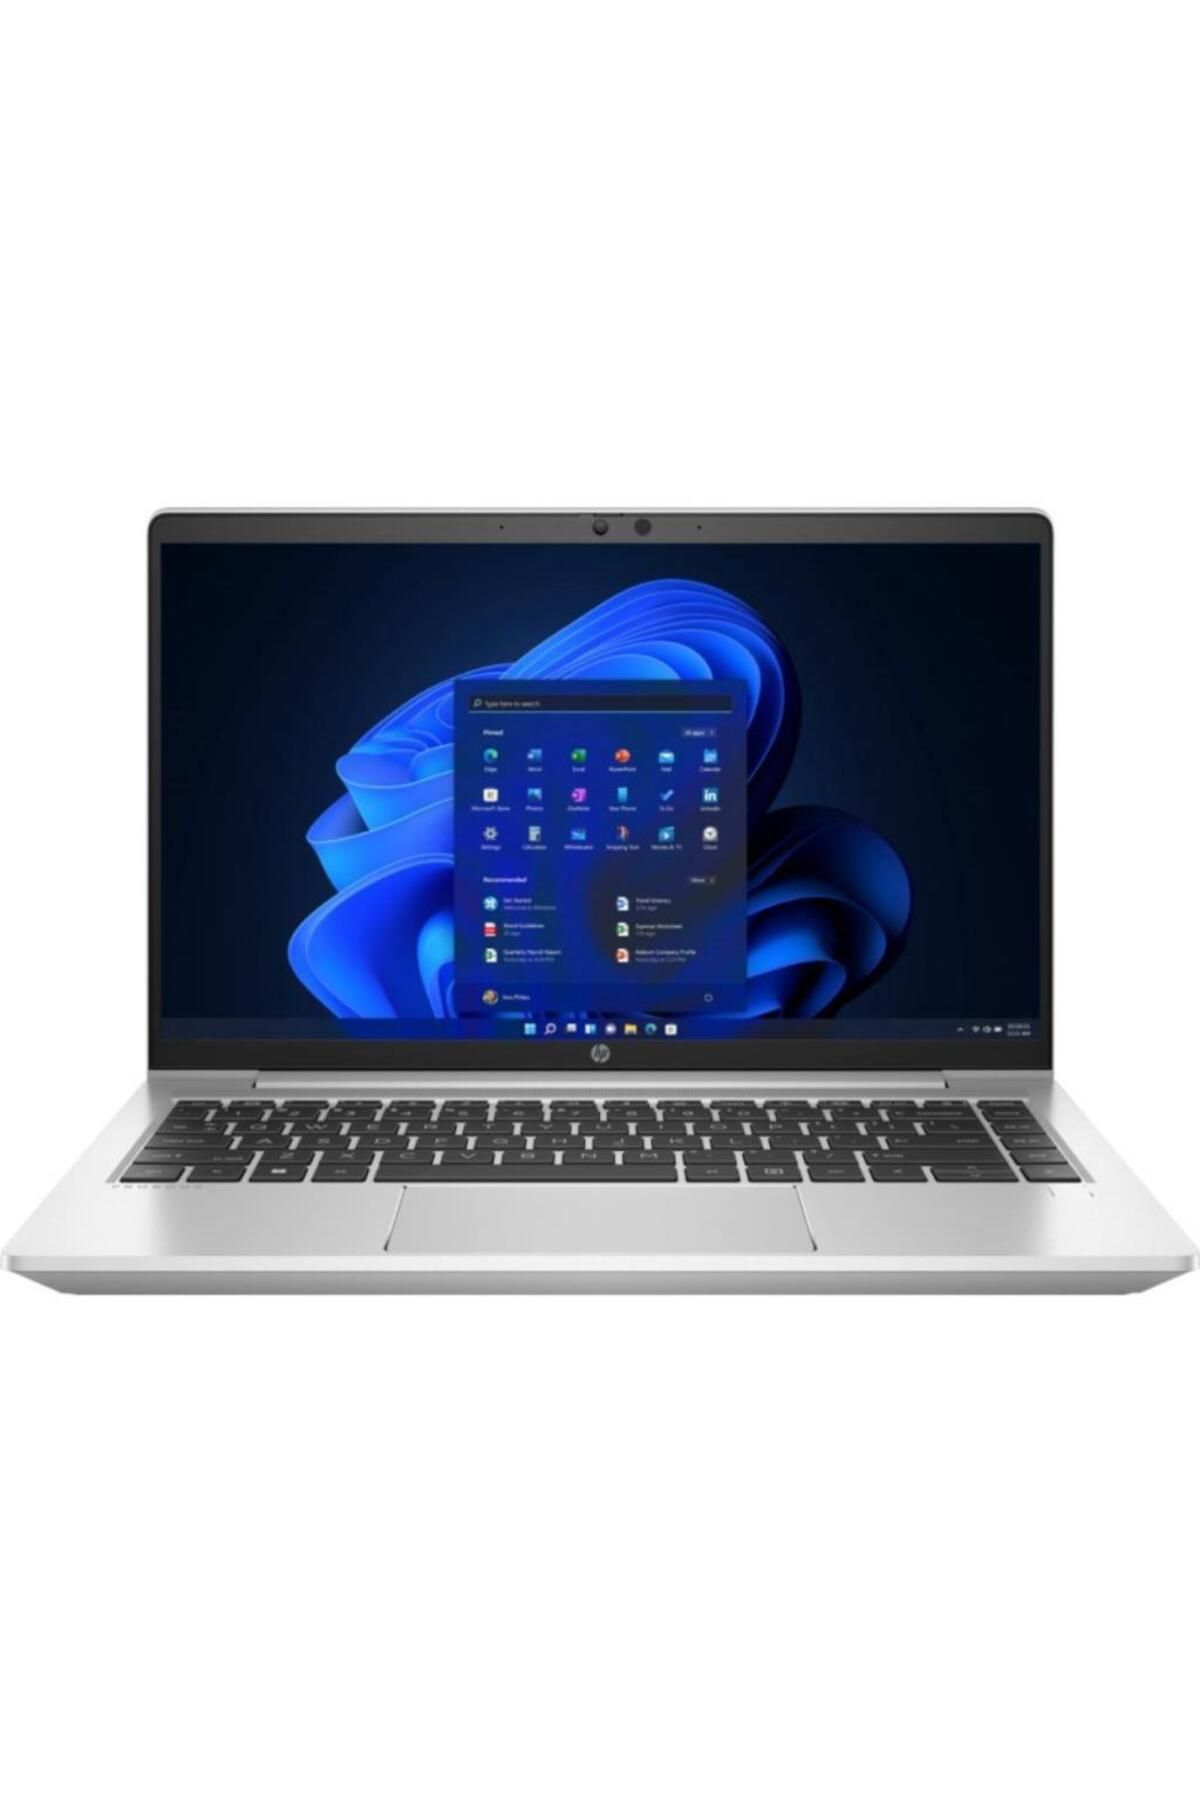 HP Probook 440 G8 32m52ea I5-1135g7 8 Gb 256 Gb Ssd 14" Free Dos Dizüstü Bilgisayar